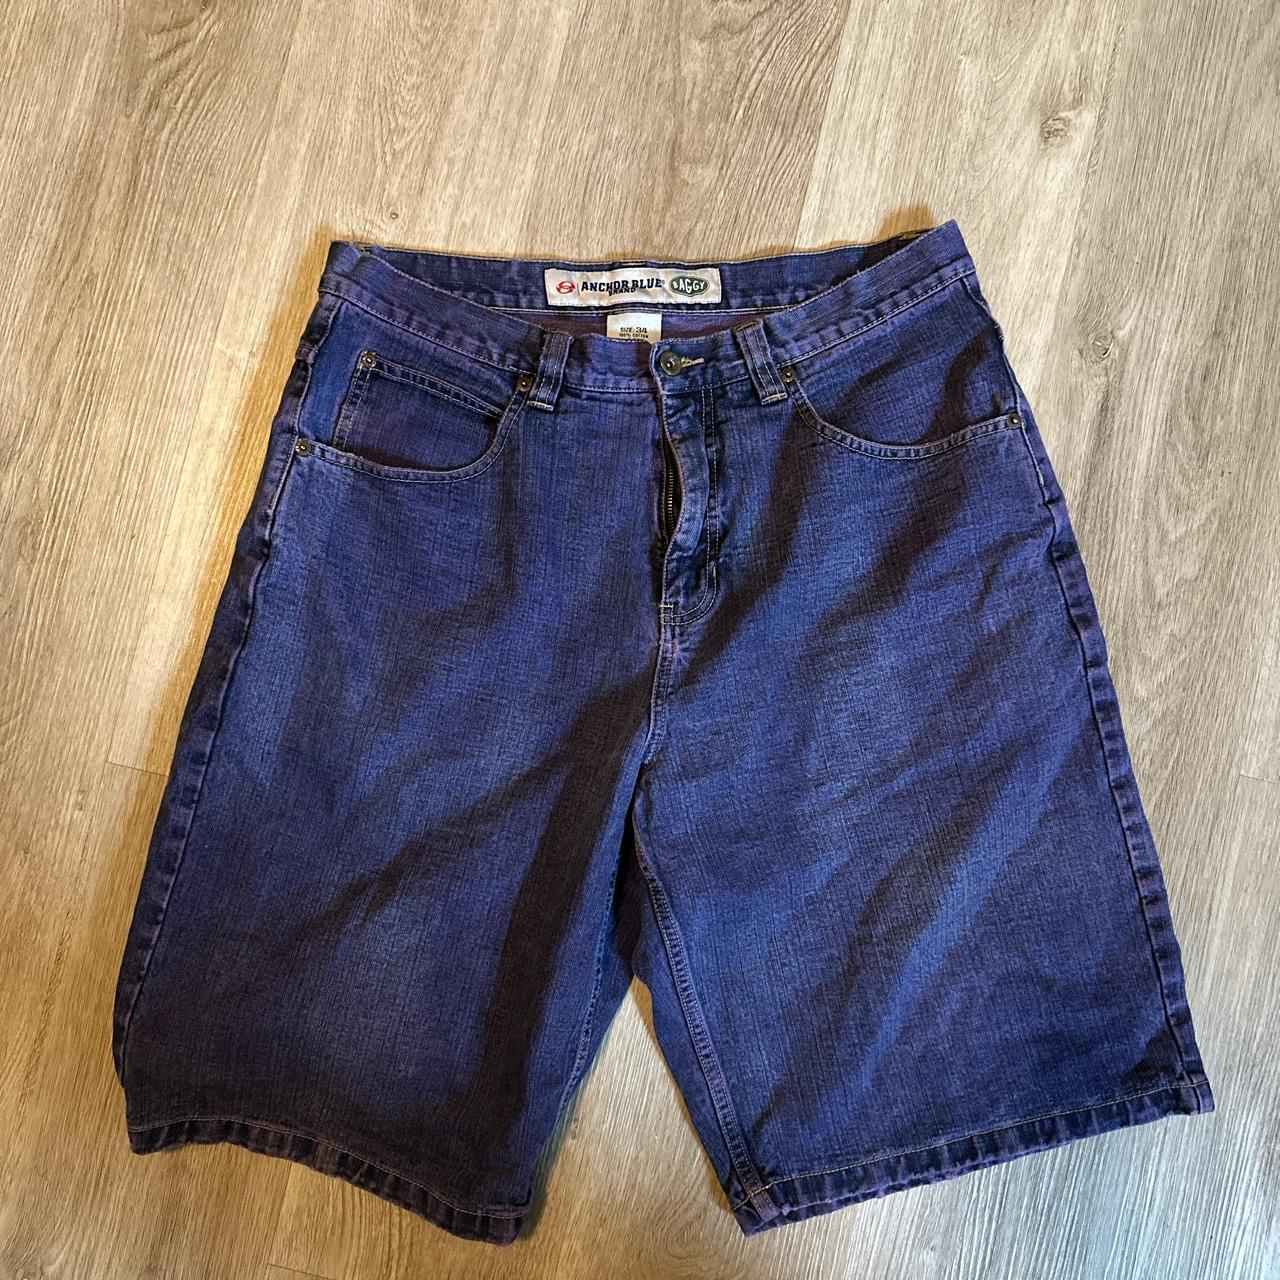 Anchor Blue Men's Shorts | Depop